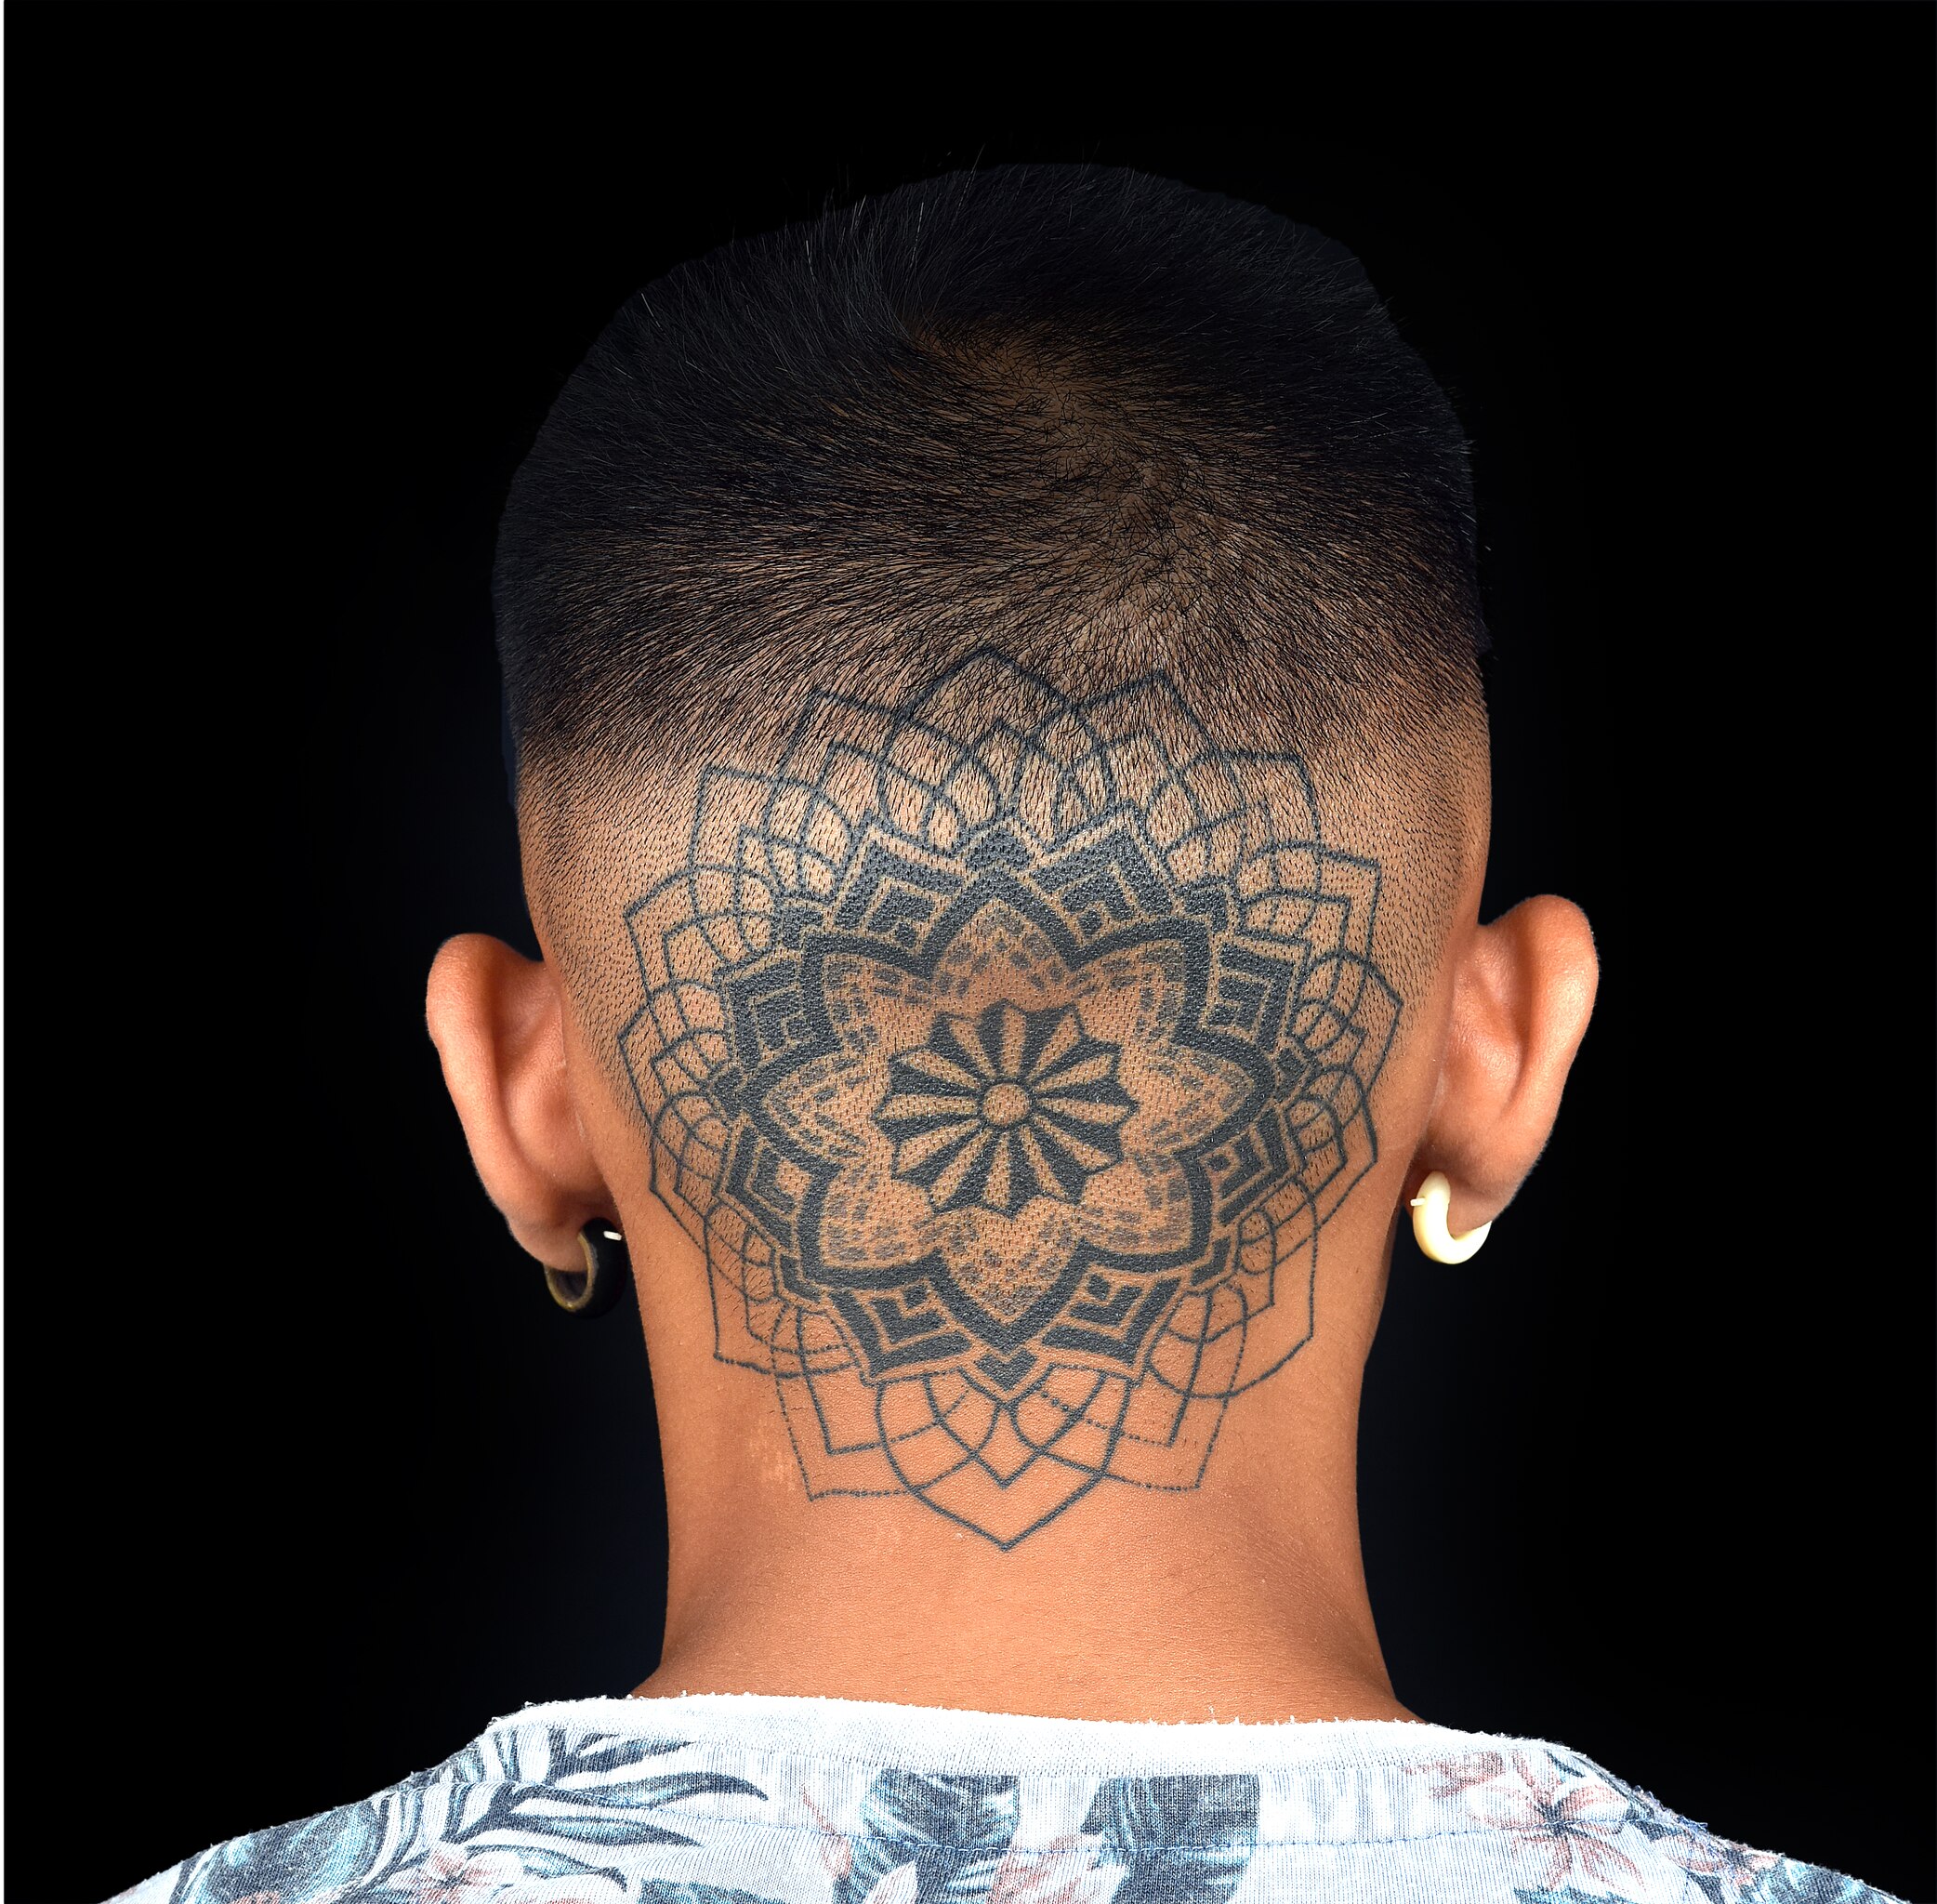 My first tattoo: Dotwork Geometric/Mandala half sleeve done by Nick Carroll  at Sharpart Studios, Handforth UK. : r/tattoos